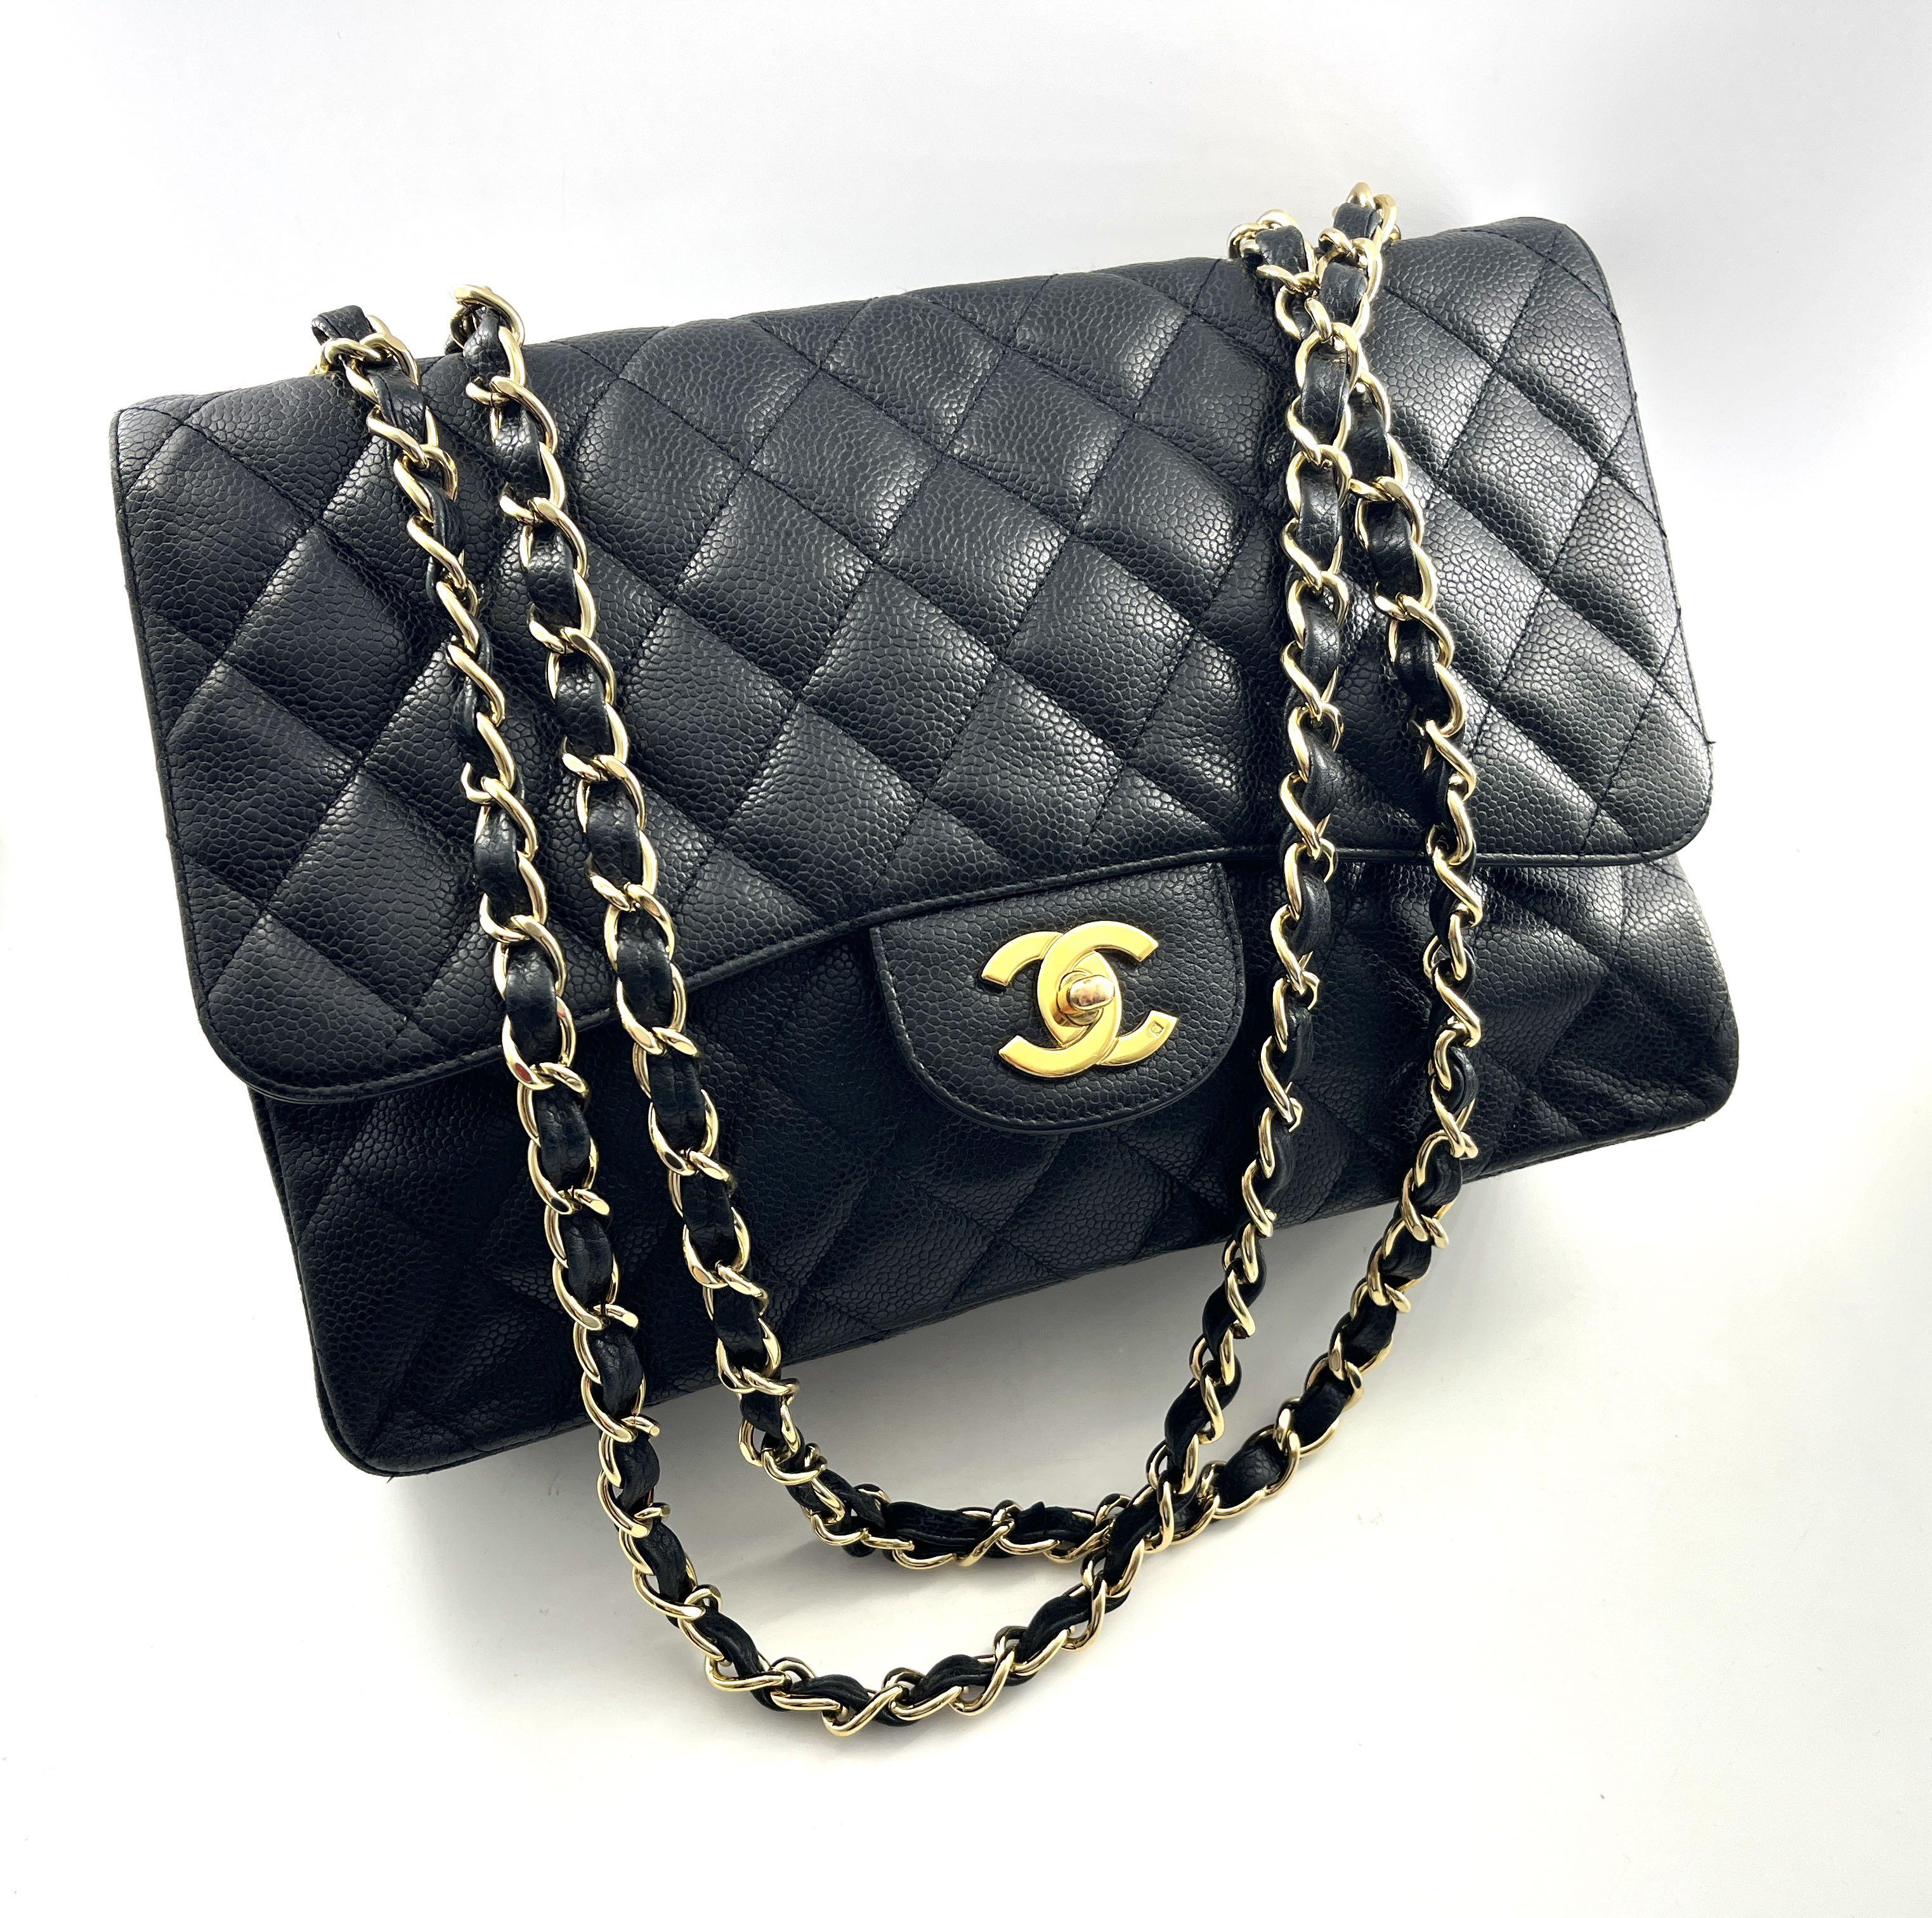 Chanel 2.55 Classic Flap Large handbag gold chain strap black